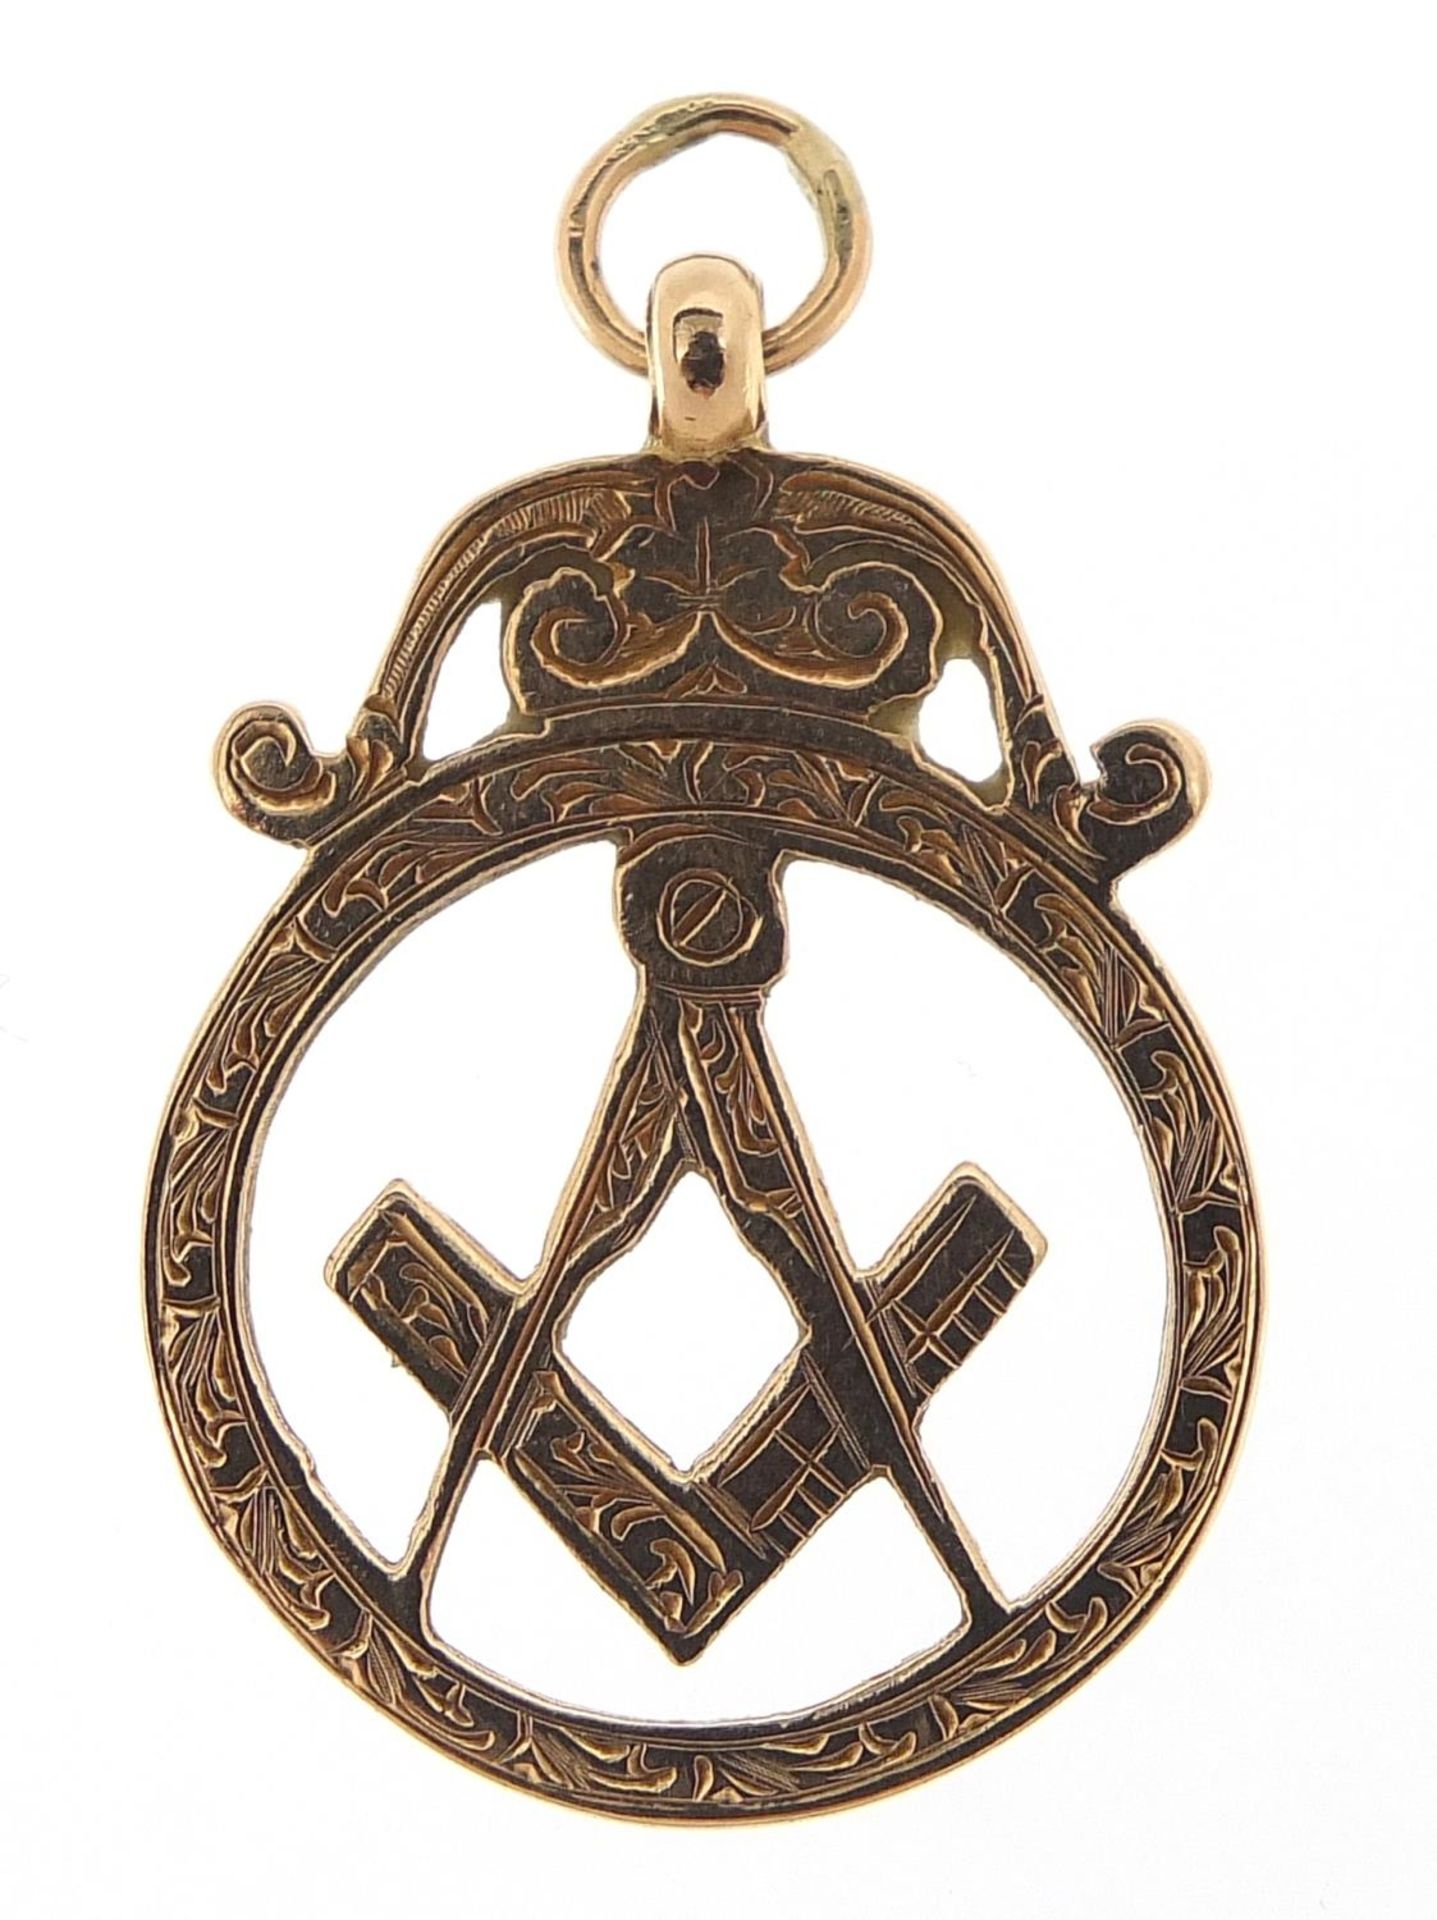 9ct gold masonic pendant, 3.0cm high, 3.8g